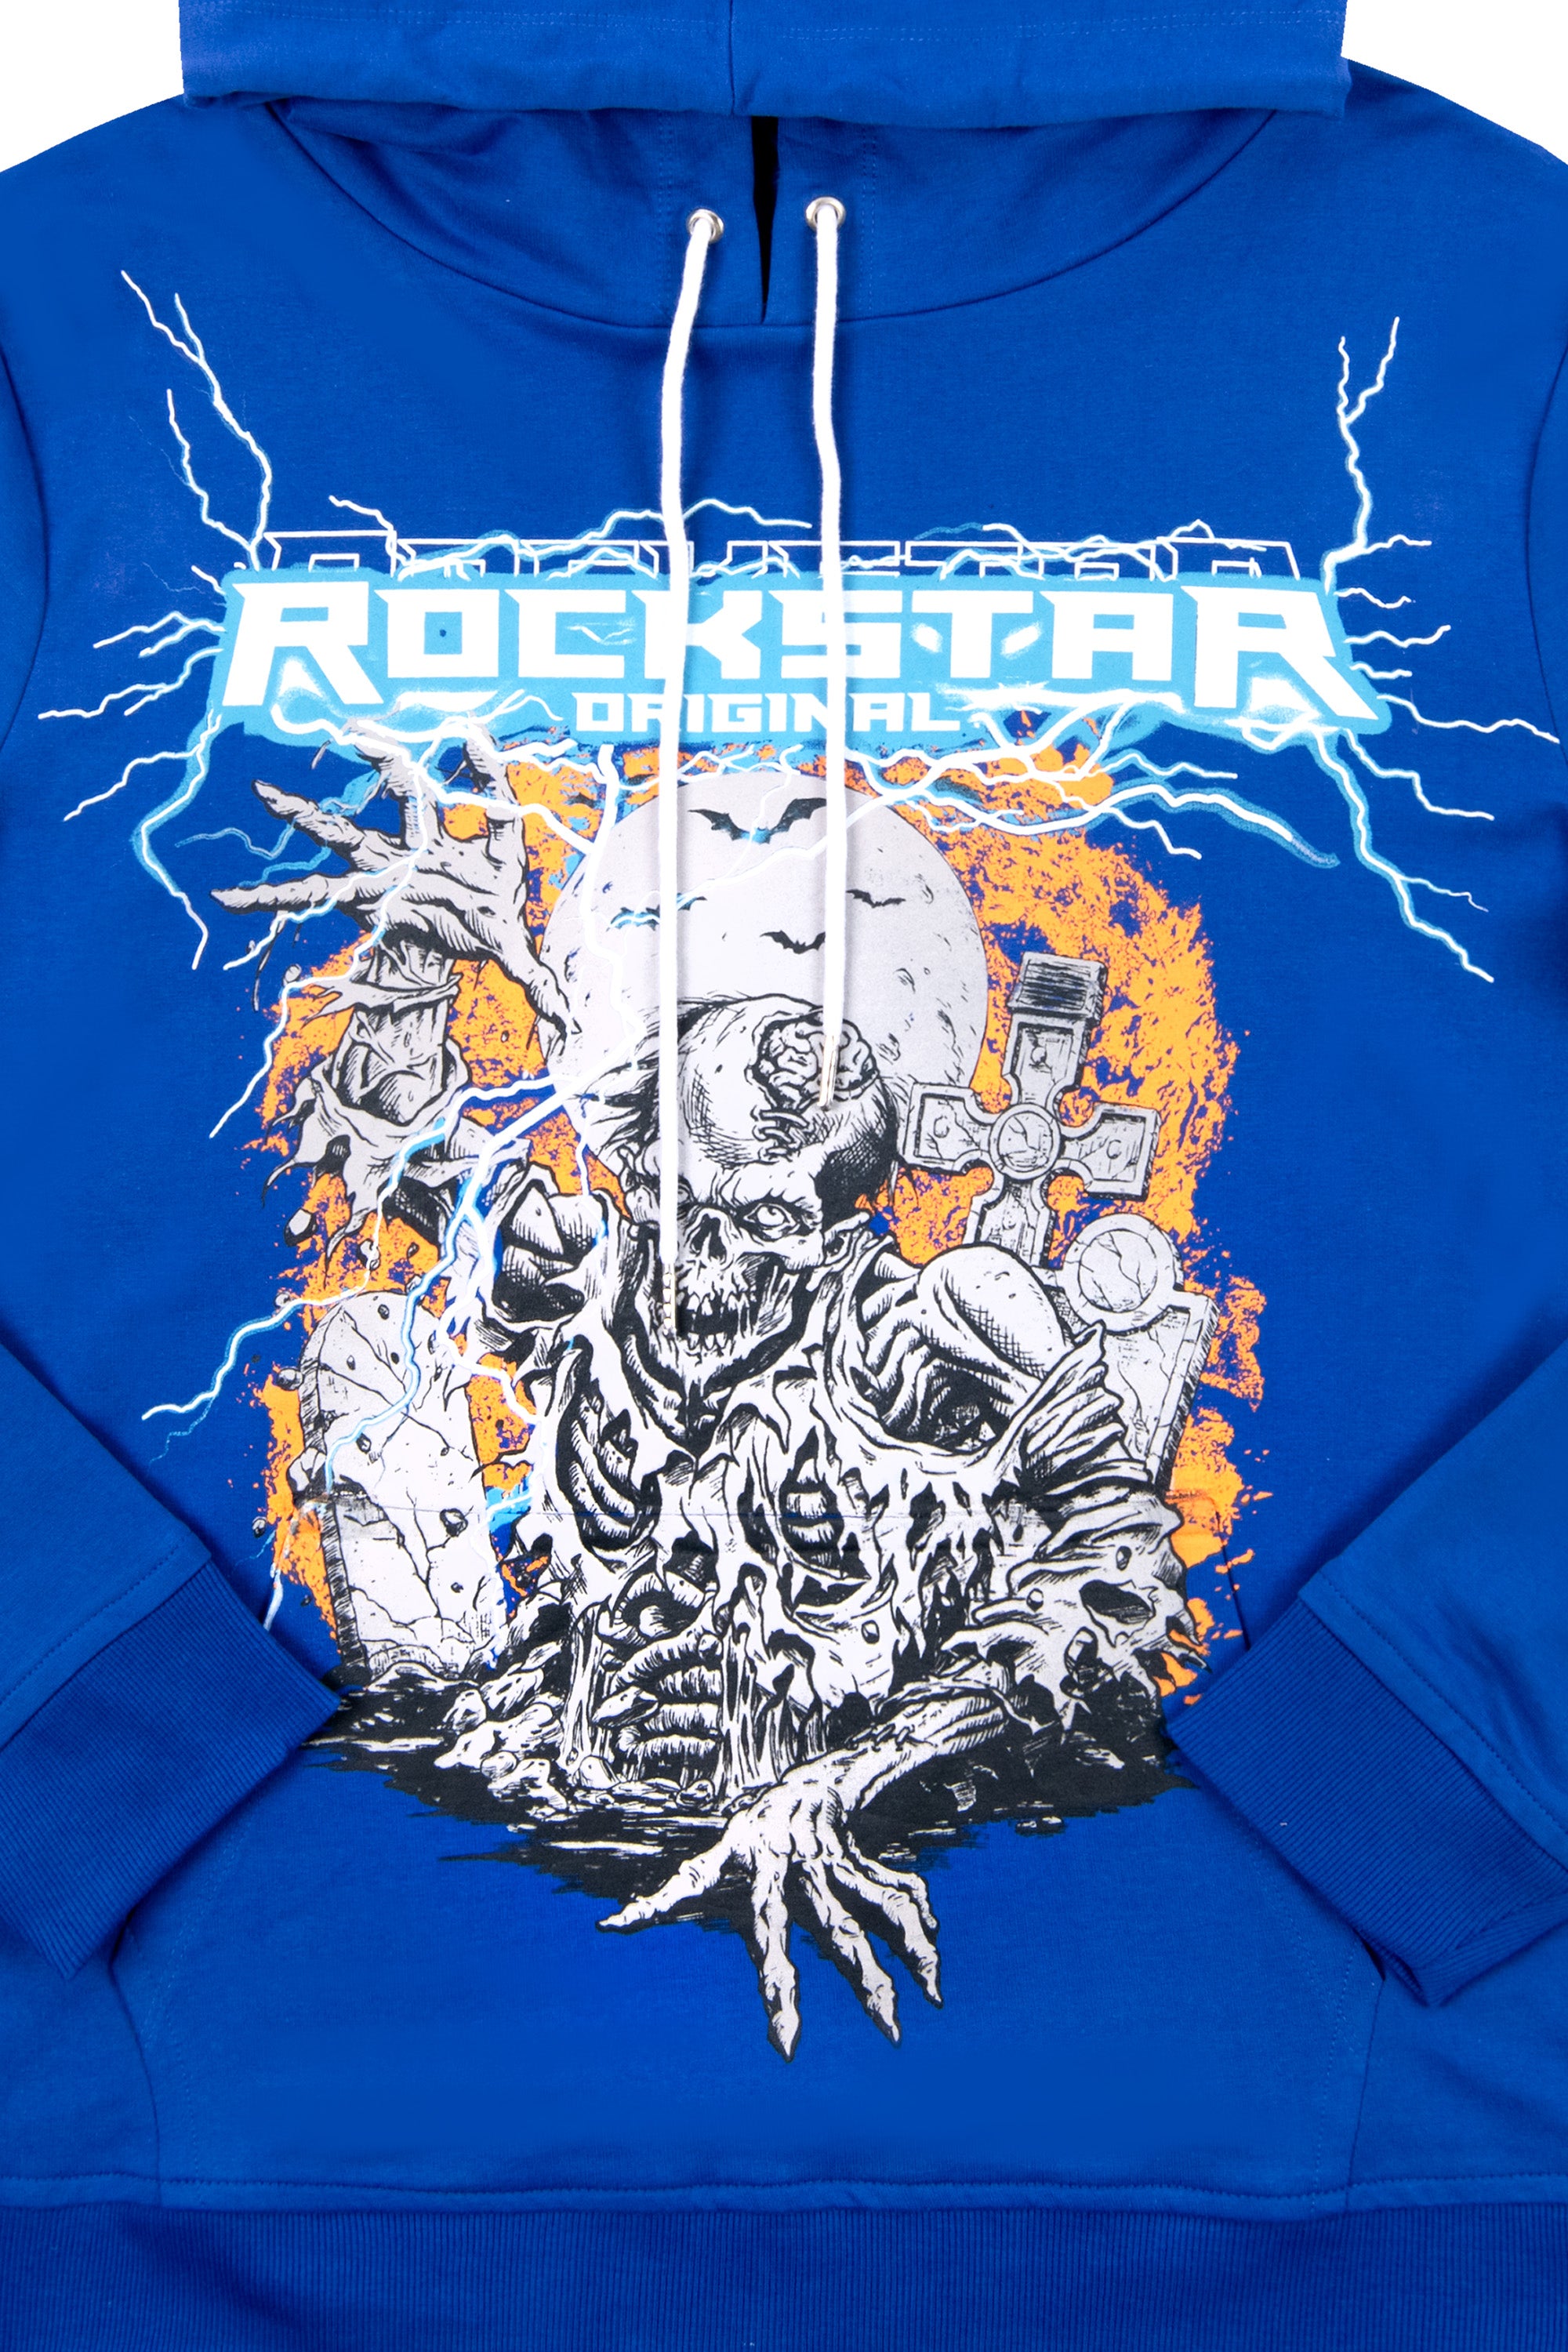 Make It Rain Royal Blue Oversized Hoodie– Rockstar Original